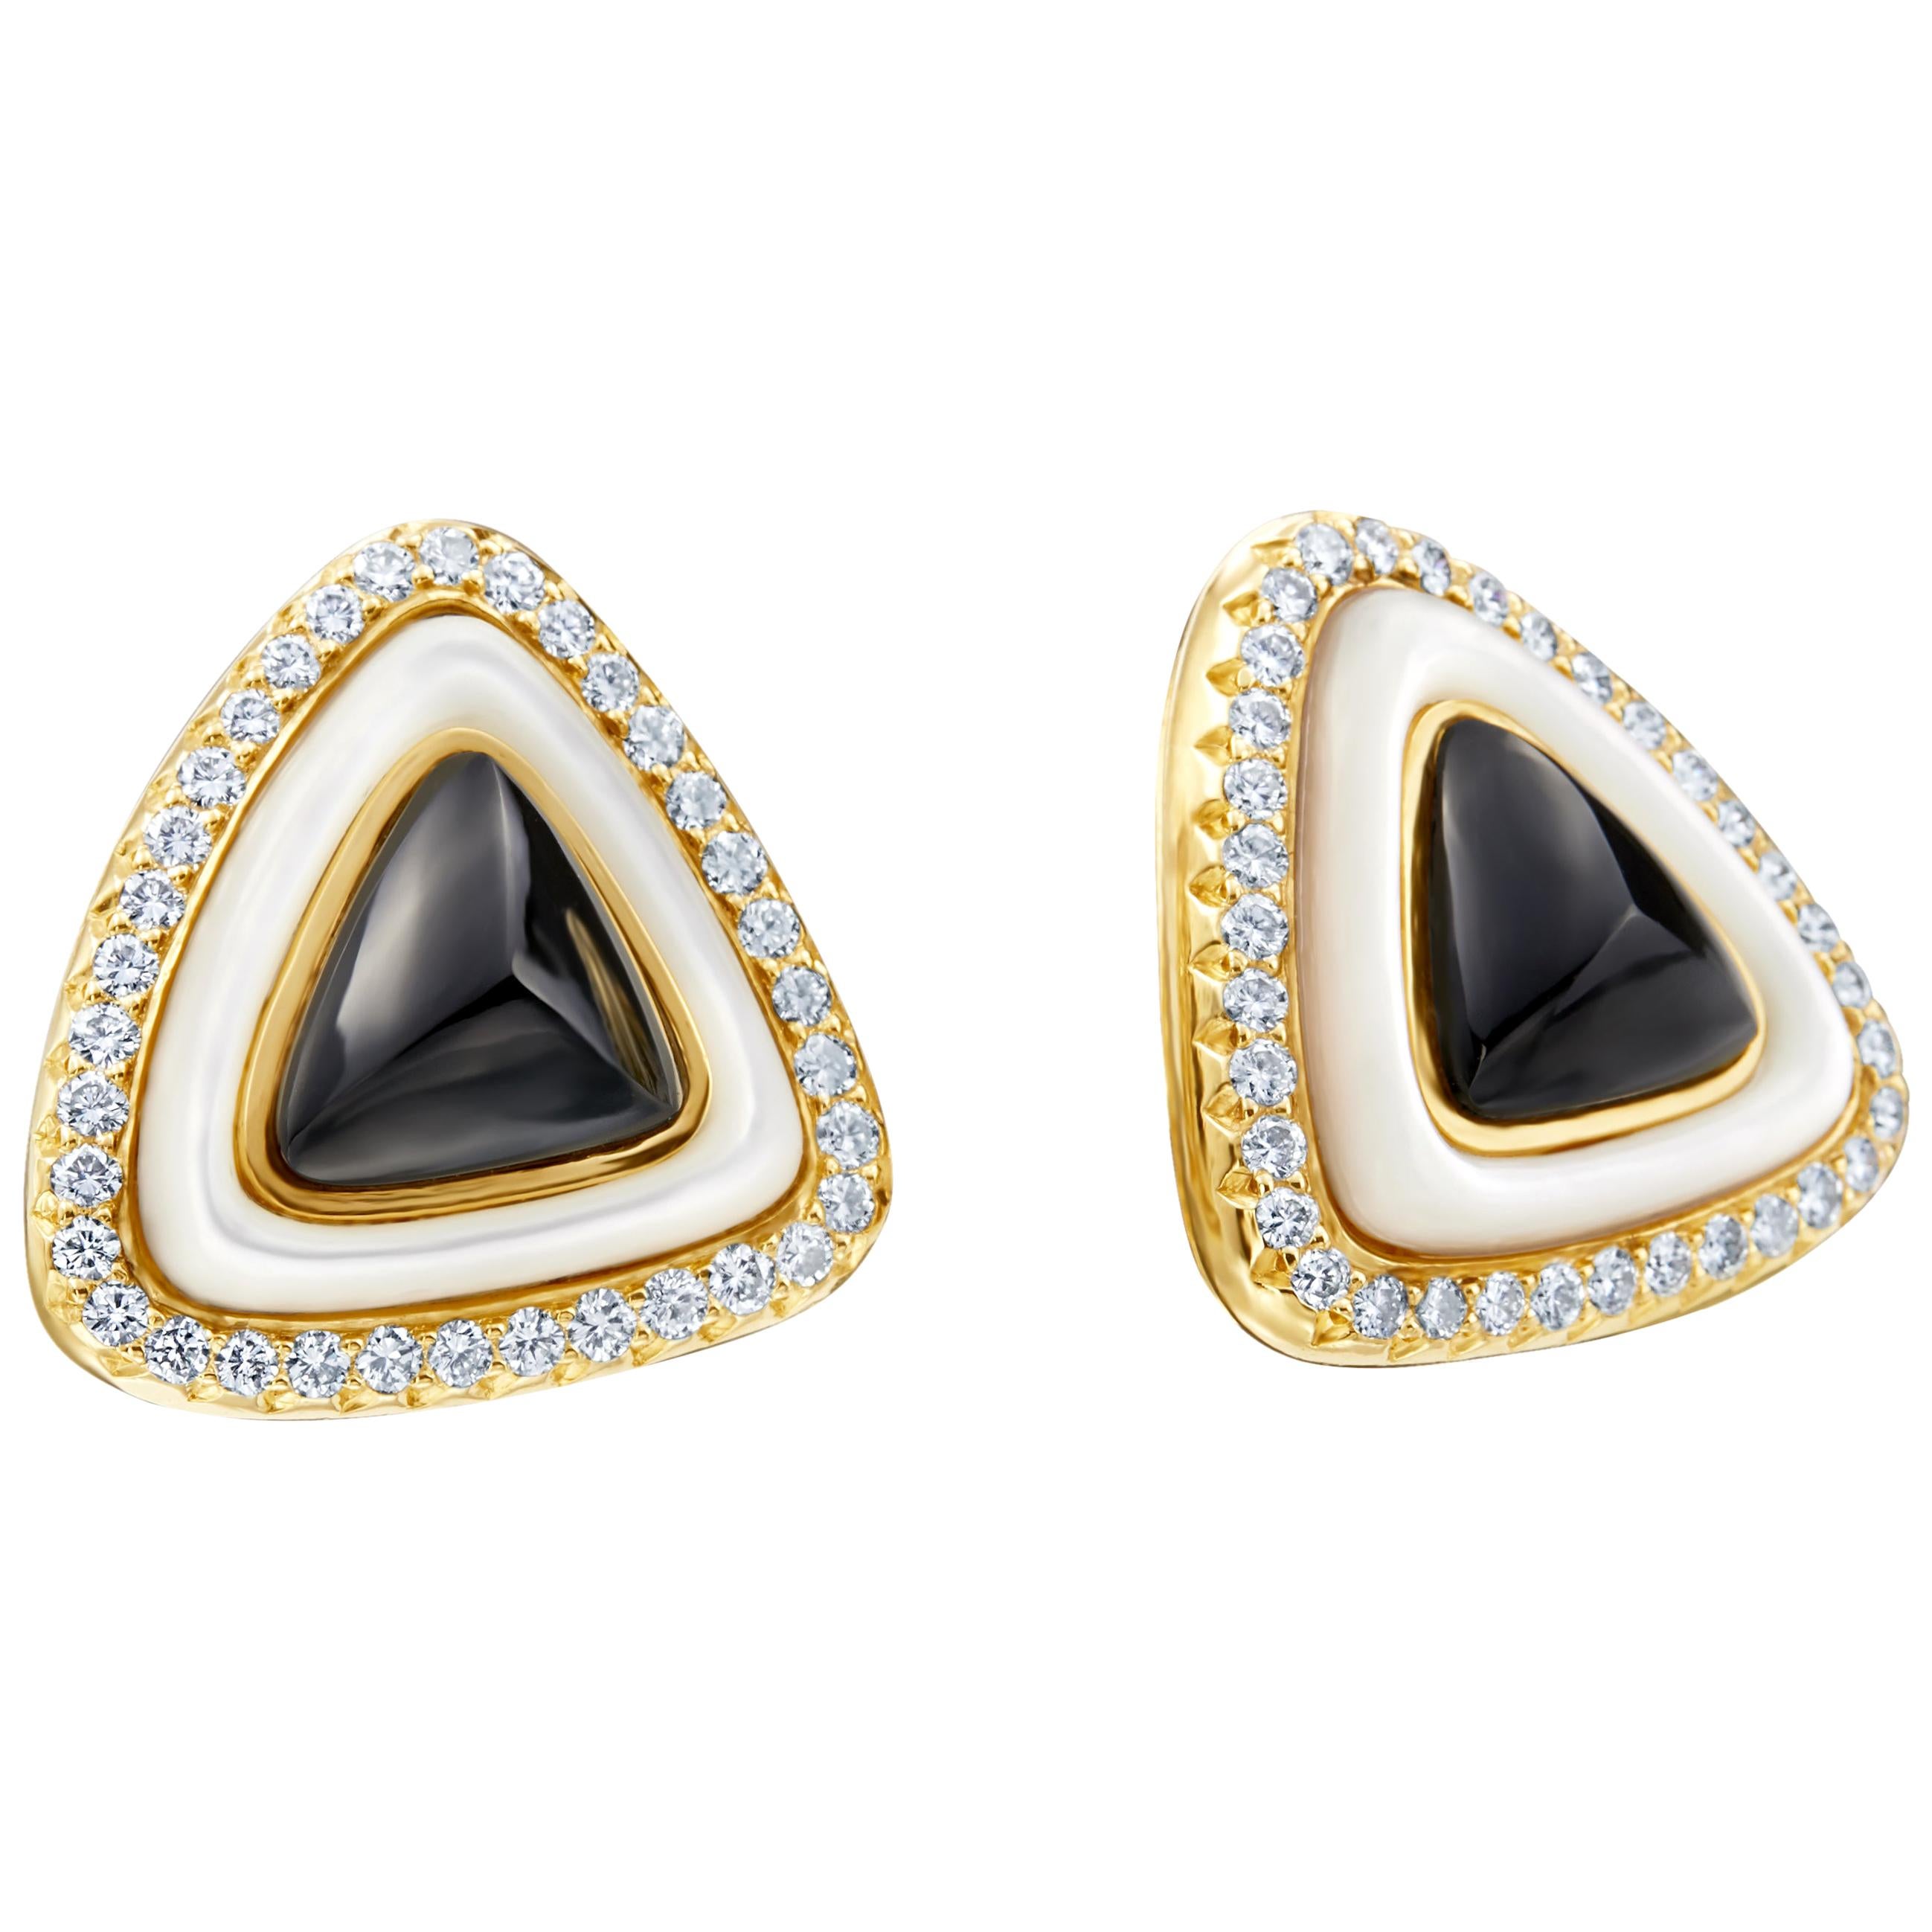 2.80 Carat Diamonds, Black Onyx, 18 Karat Yellow Gold, Mother of Pearl Earrings